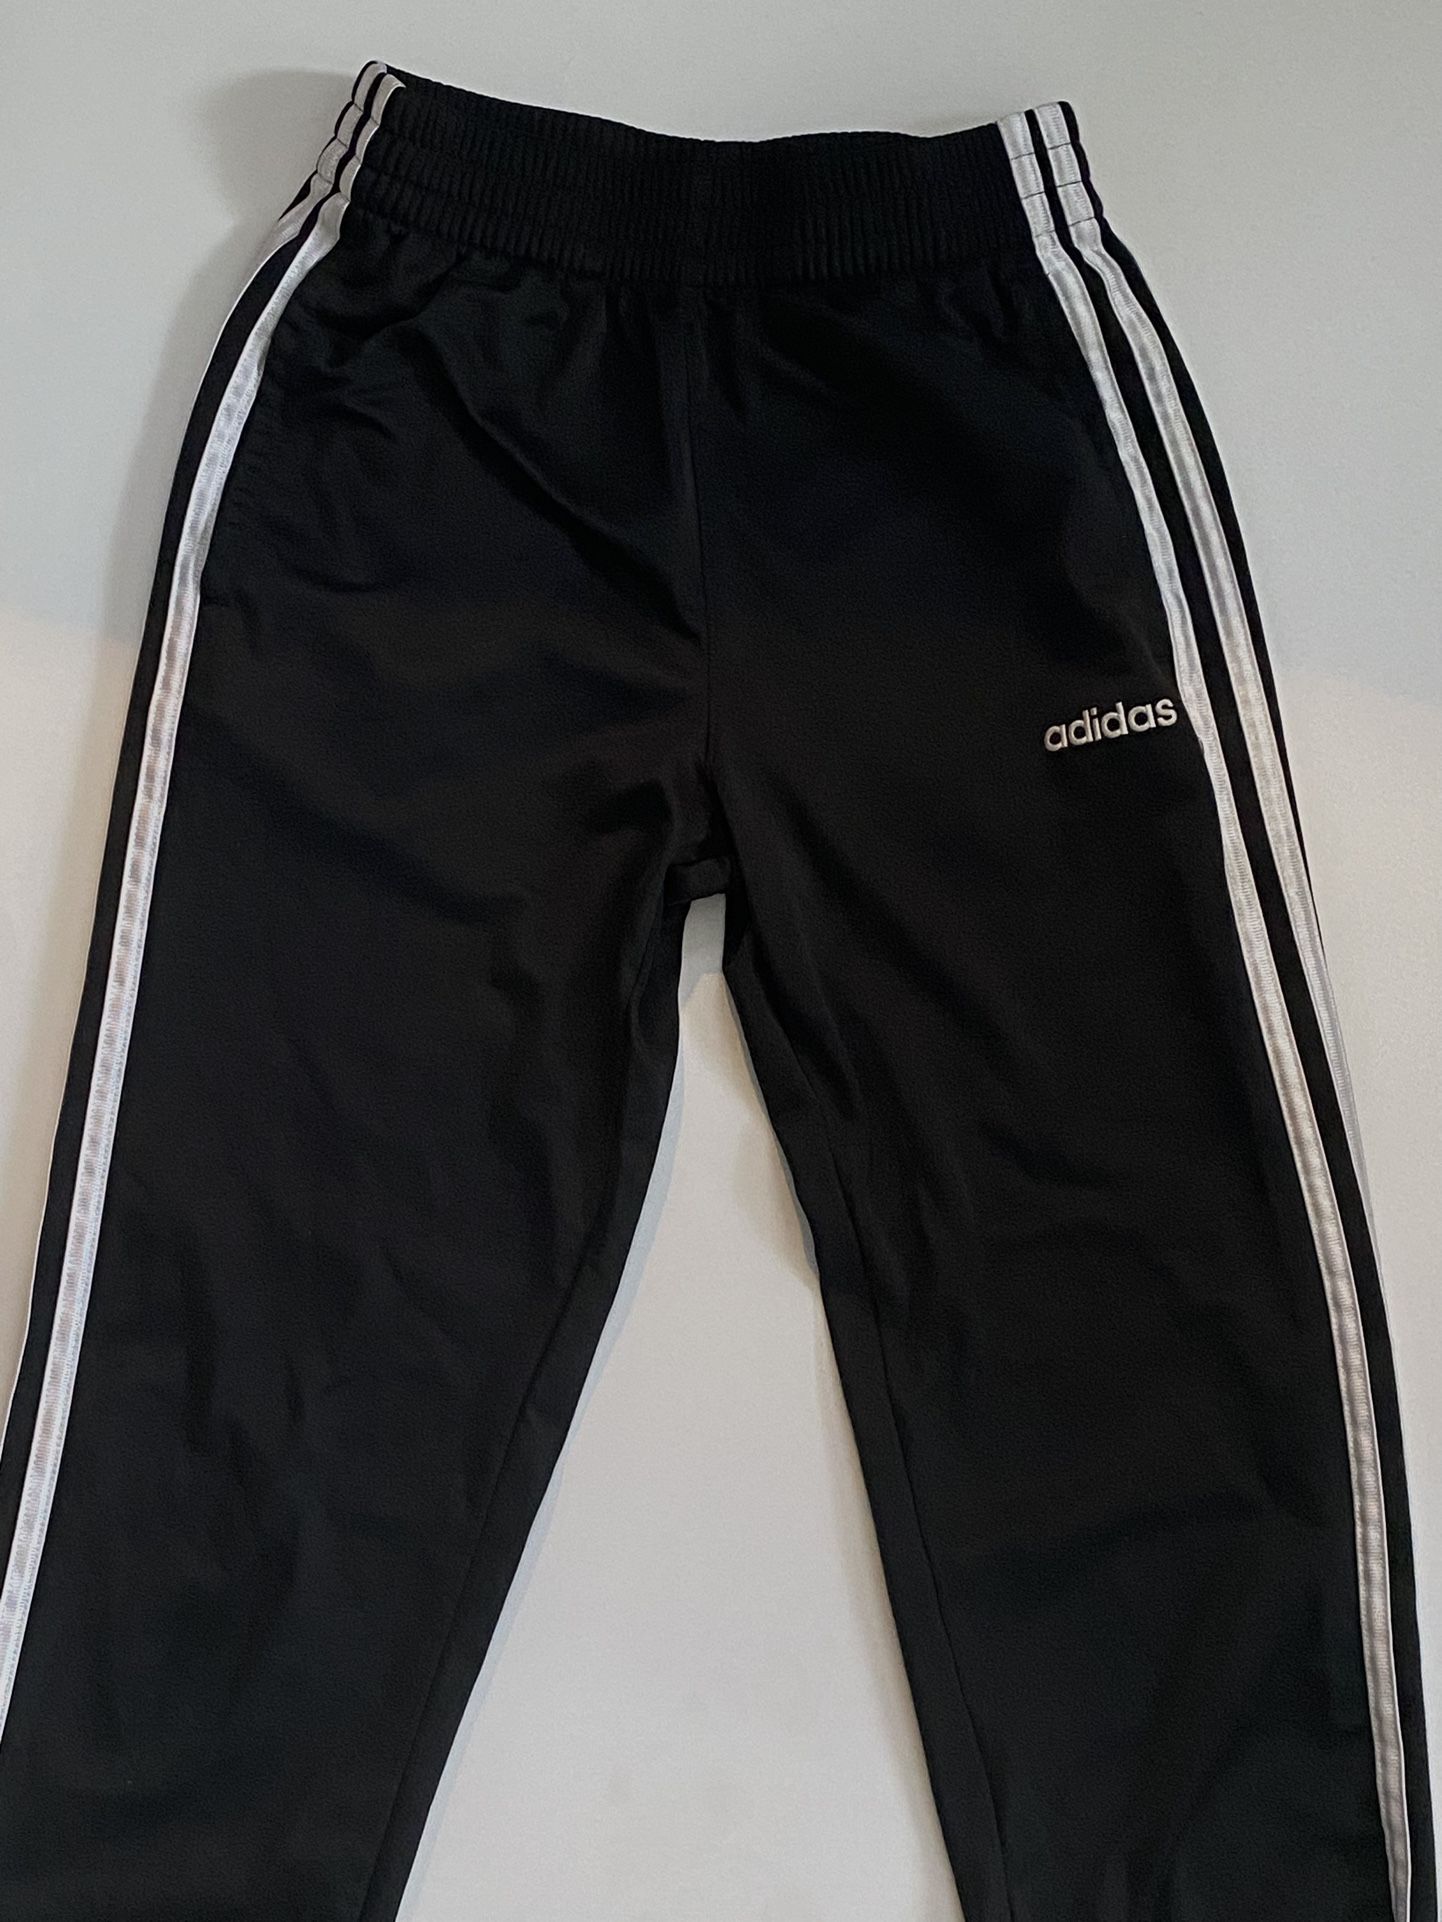 Adidas black sweat’s